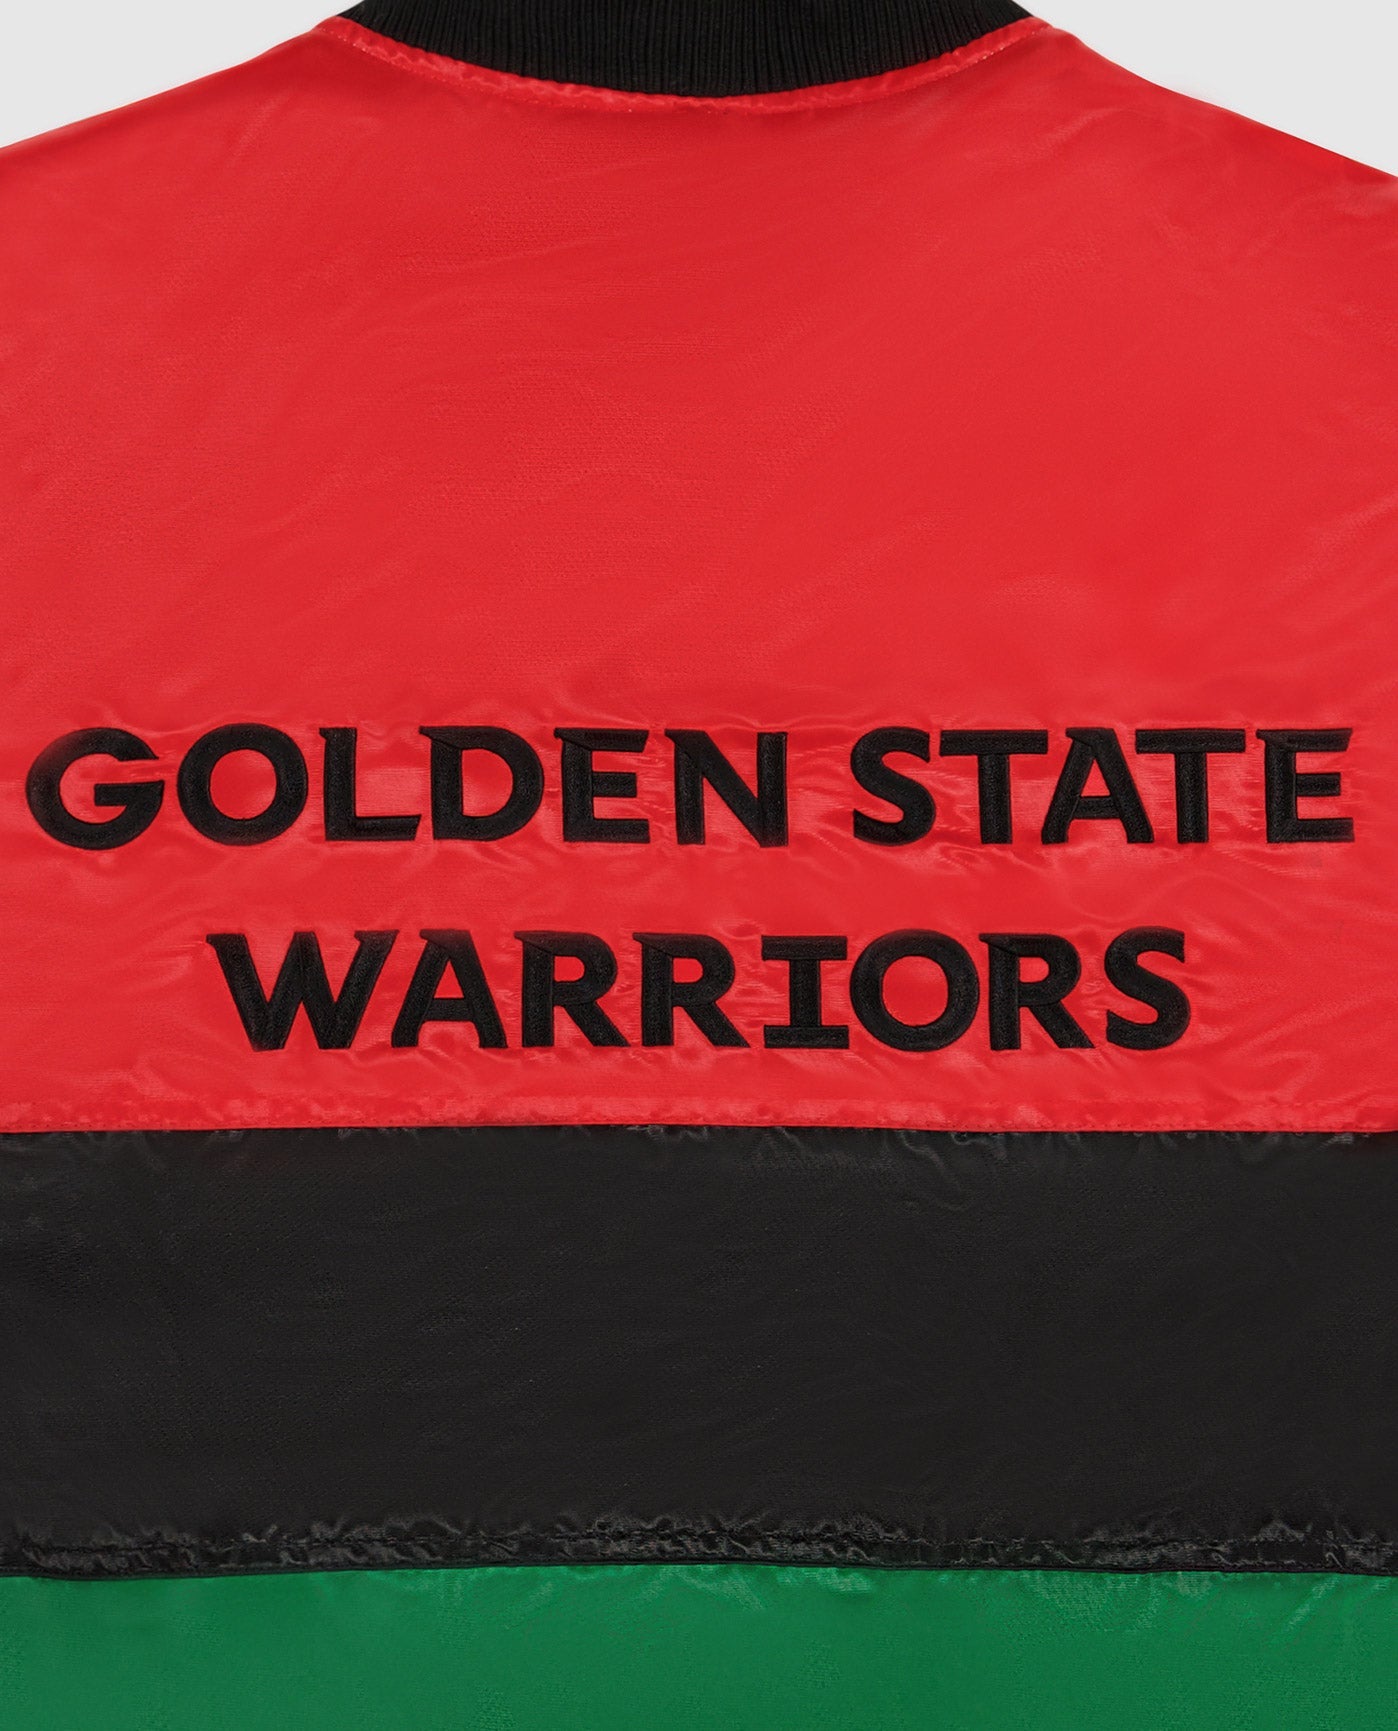 Starter Ty Mopkins Black History Month Golden State Warriors Full-Zip Jacket L / Warriors Red Black Green Mens Outerwear